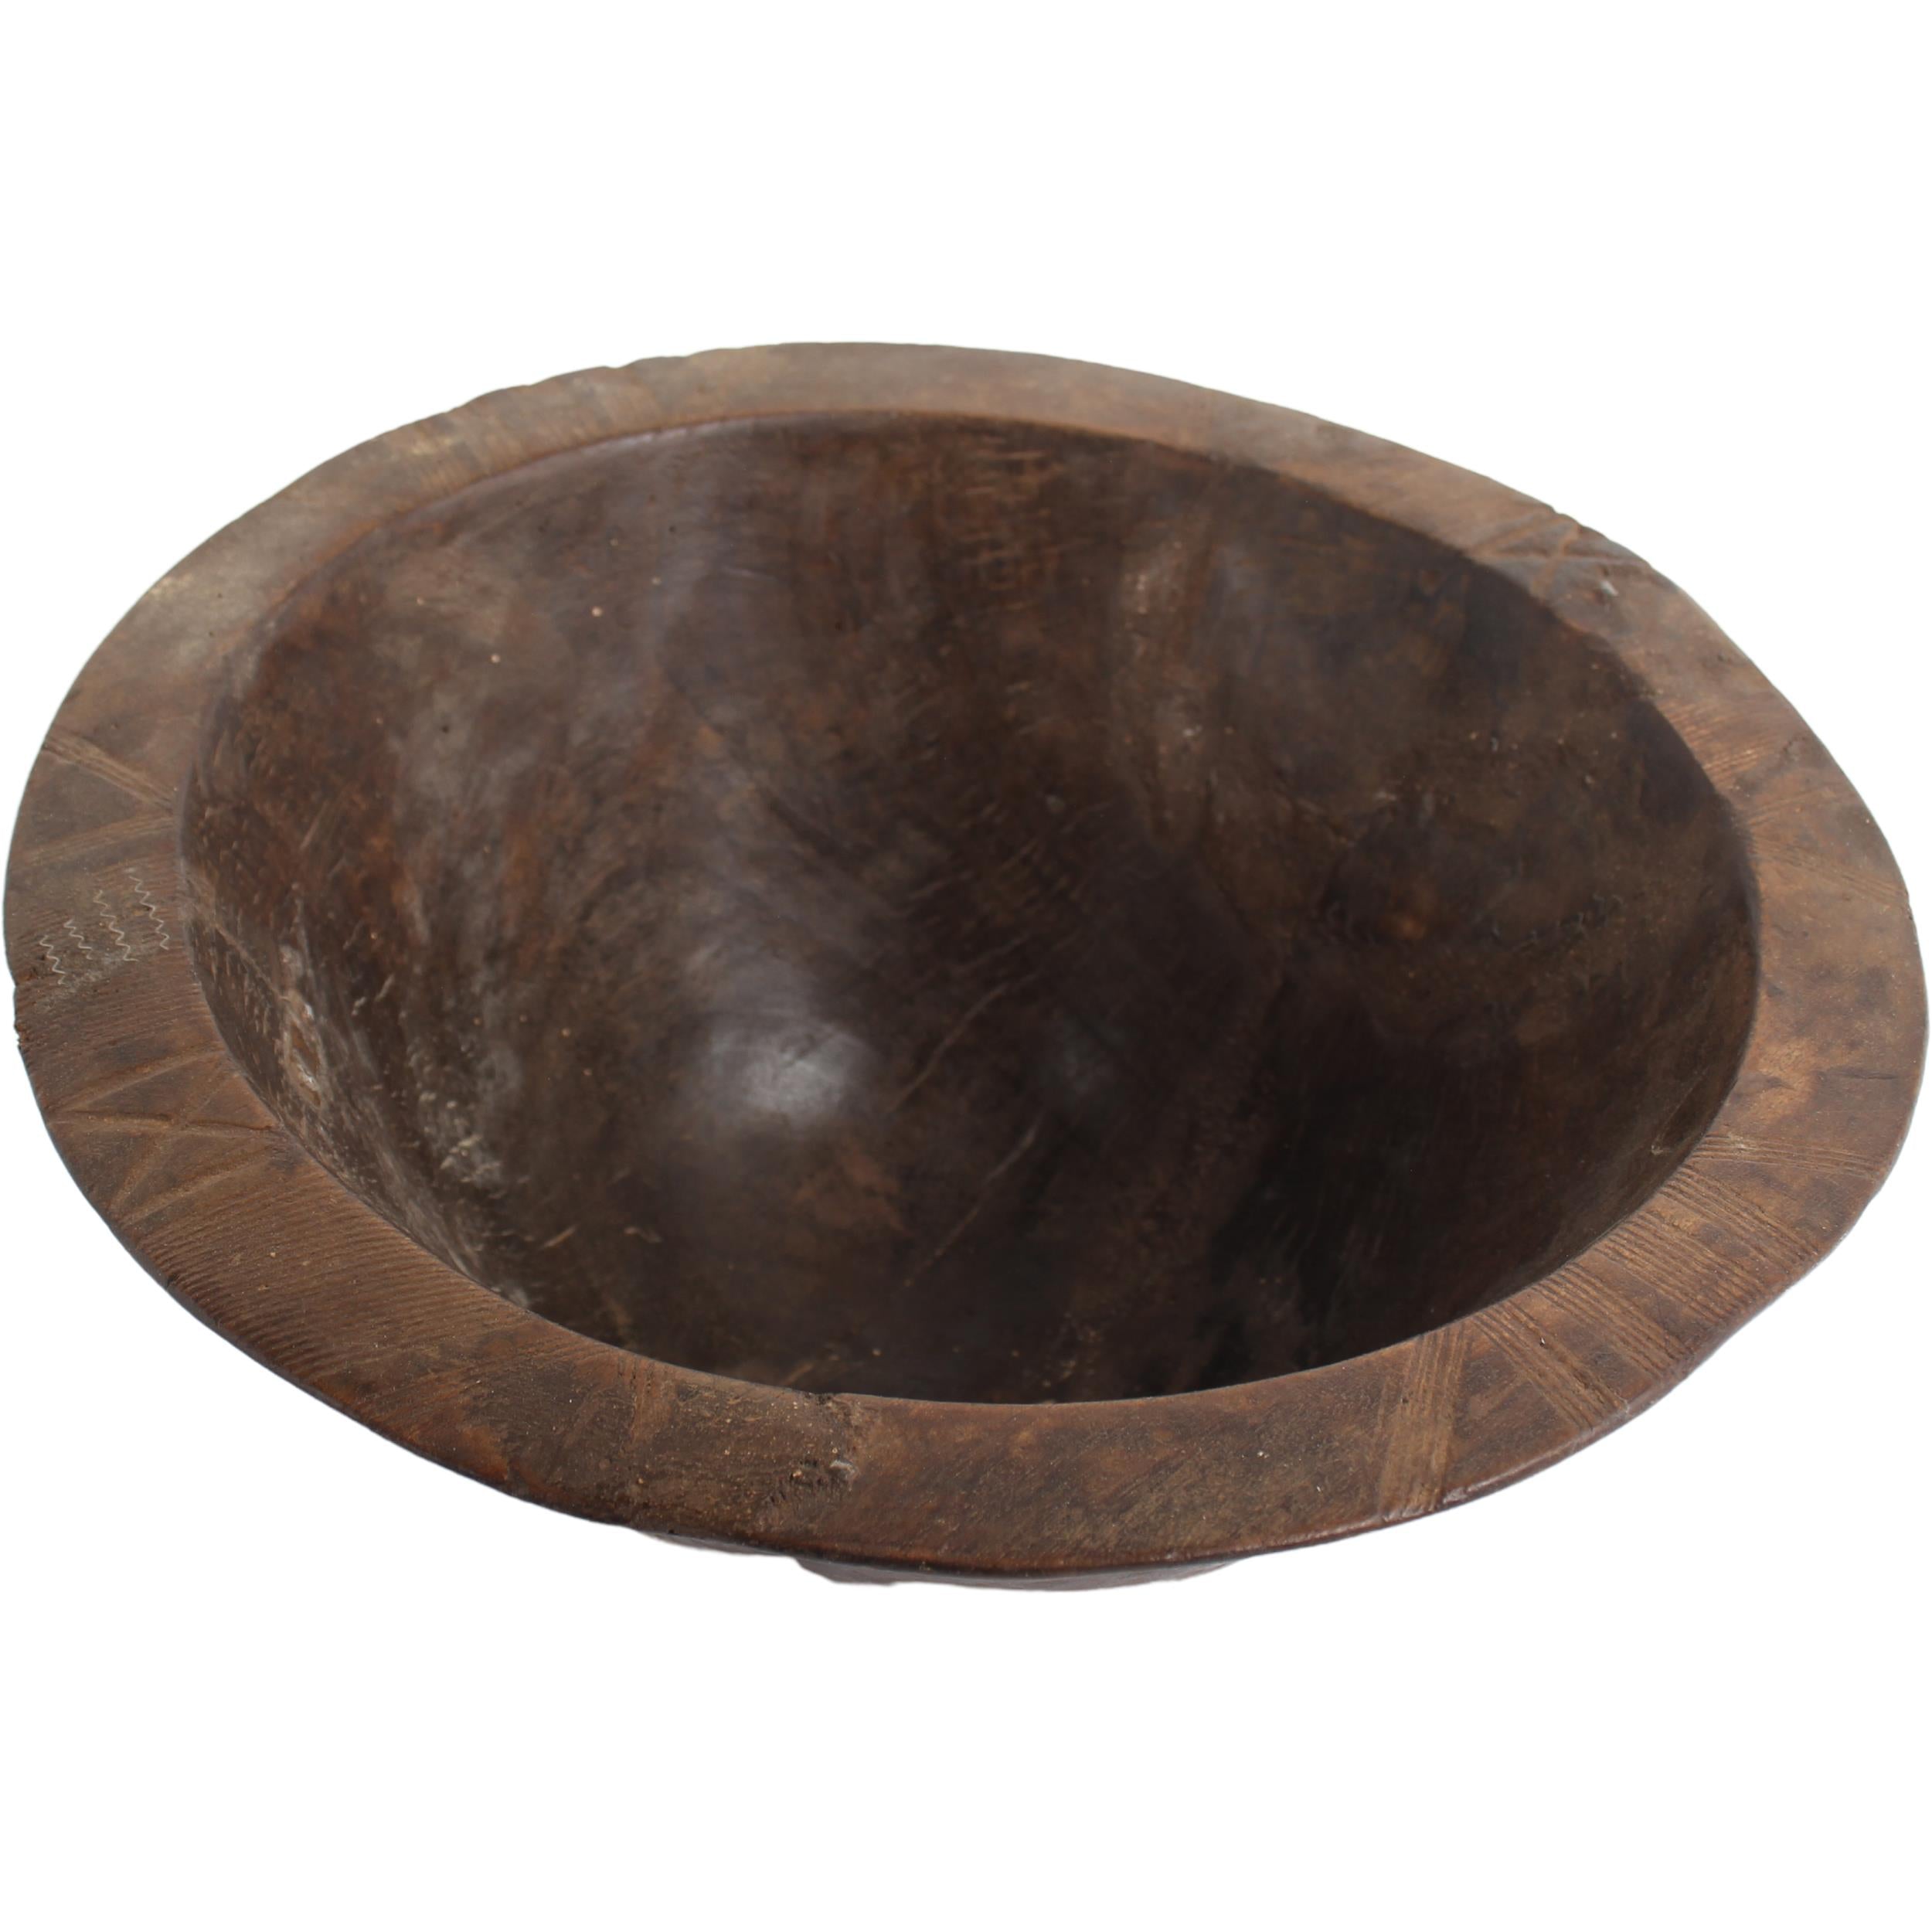 Tuareg Tribe Wooden Bowls ~6.7" Tall - Wooden Bowls